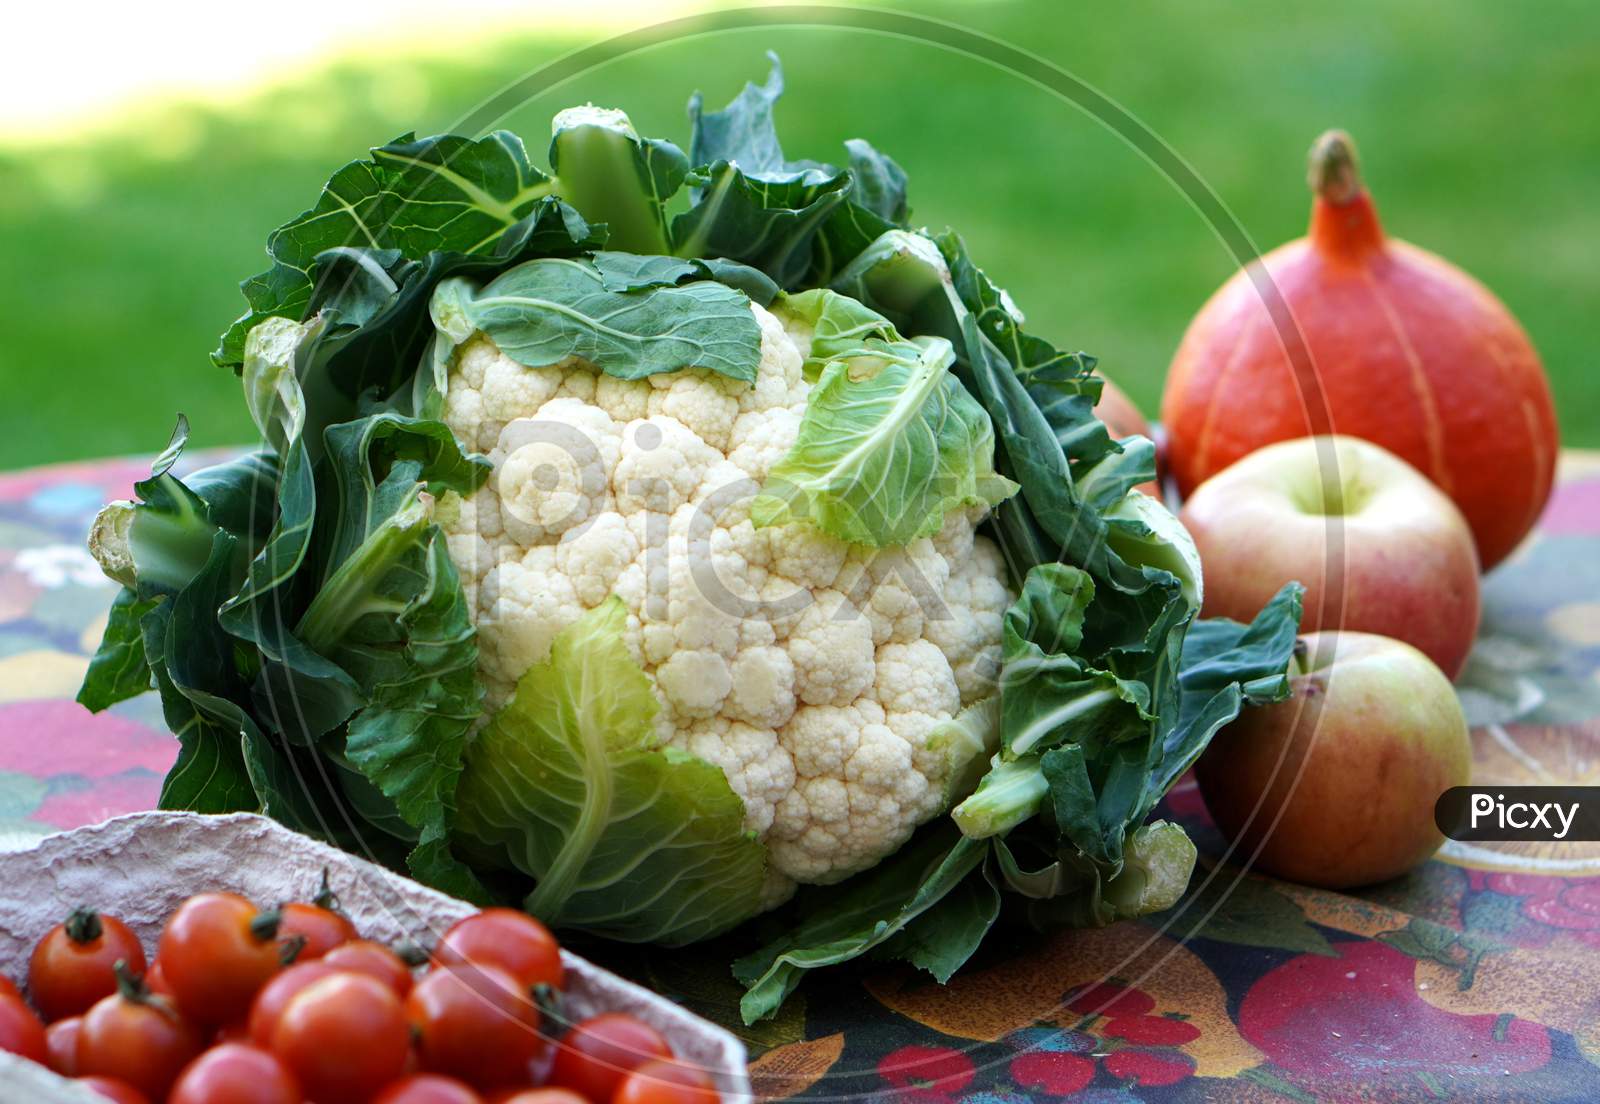 cauliflower closeup image captured at home